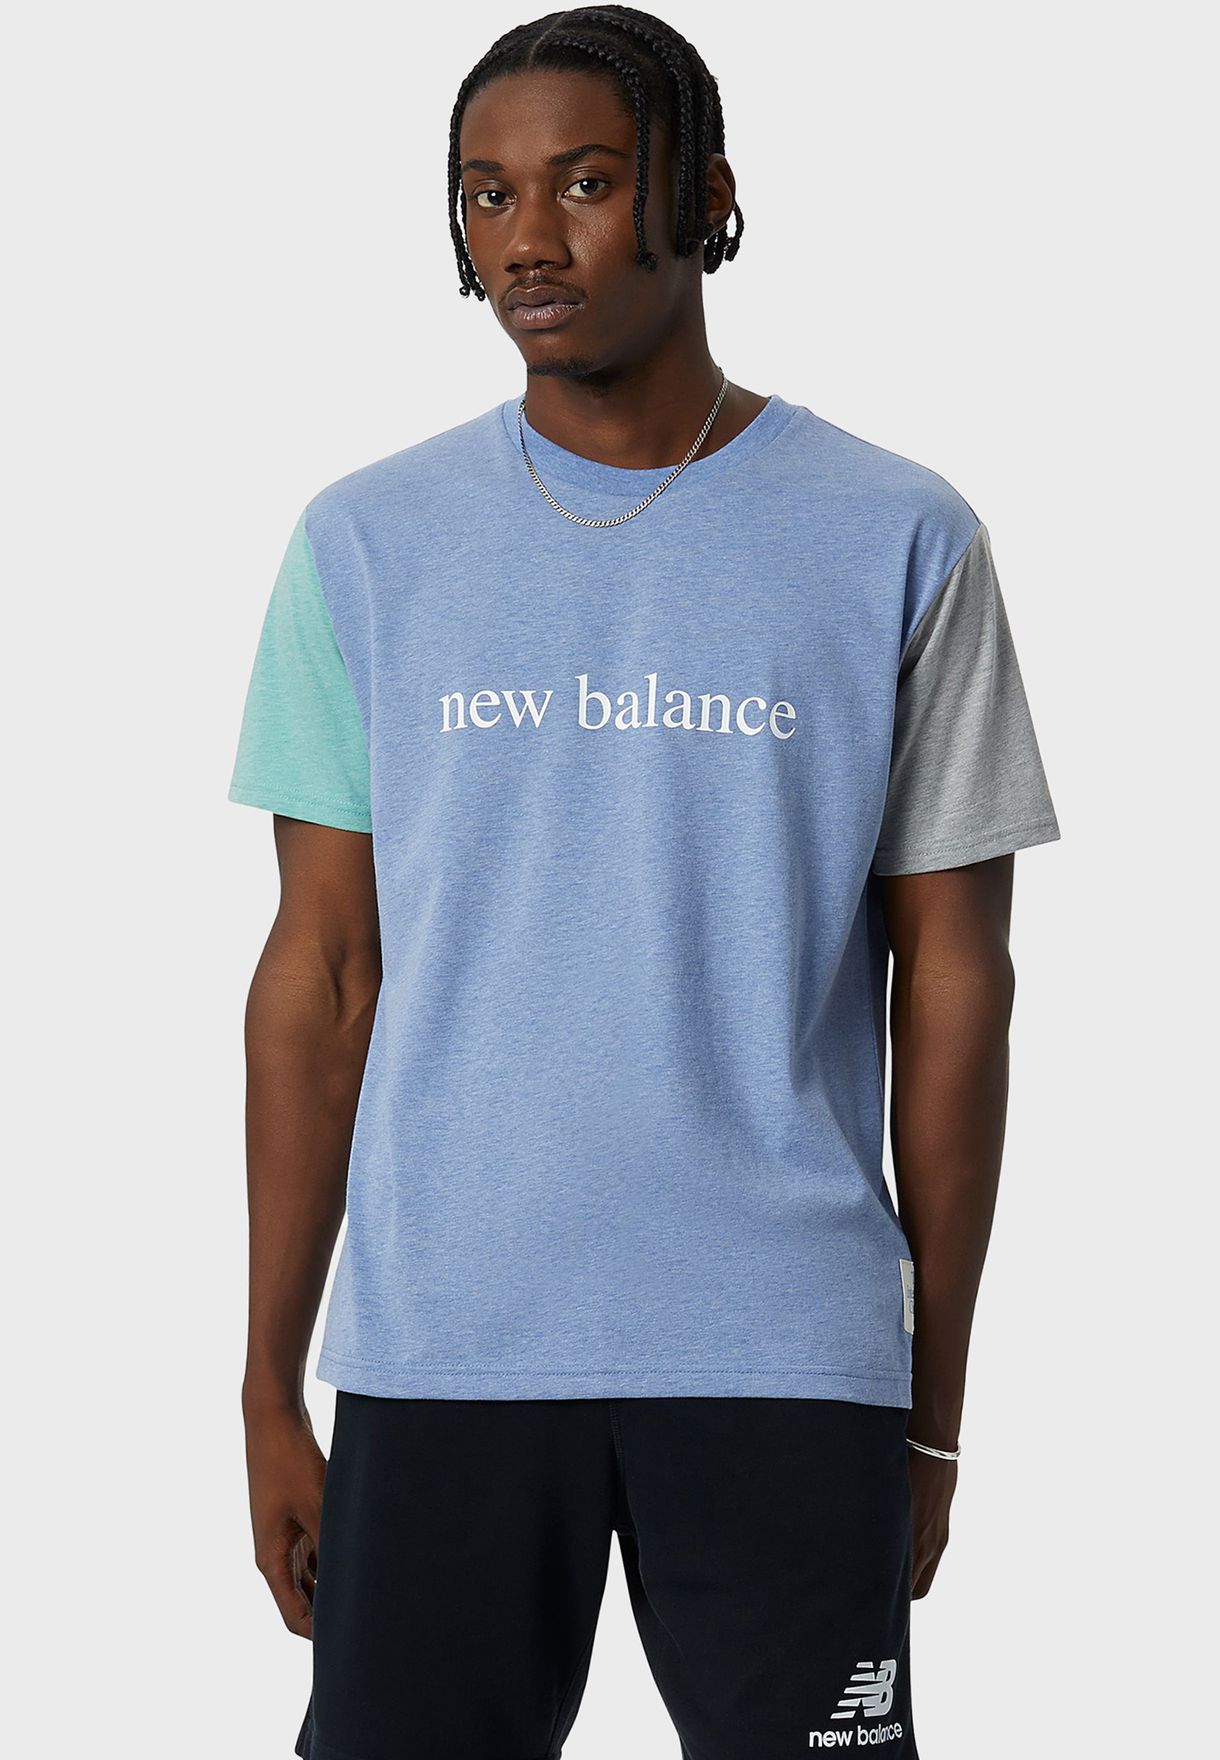 Essential Pure Balance T-Shirt